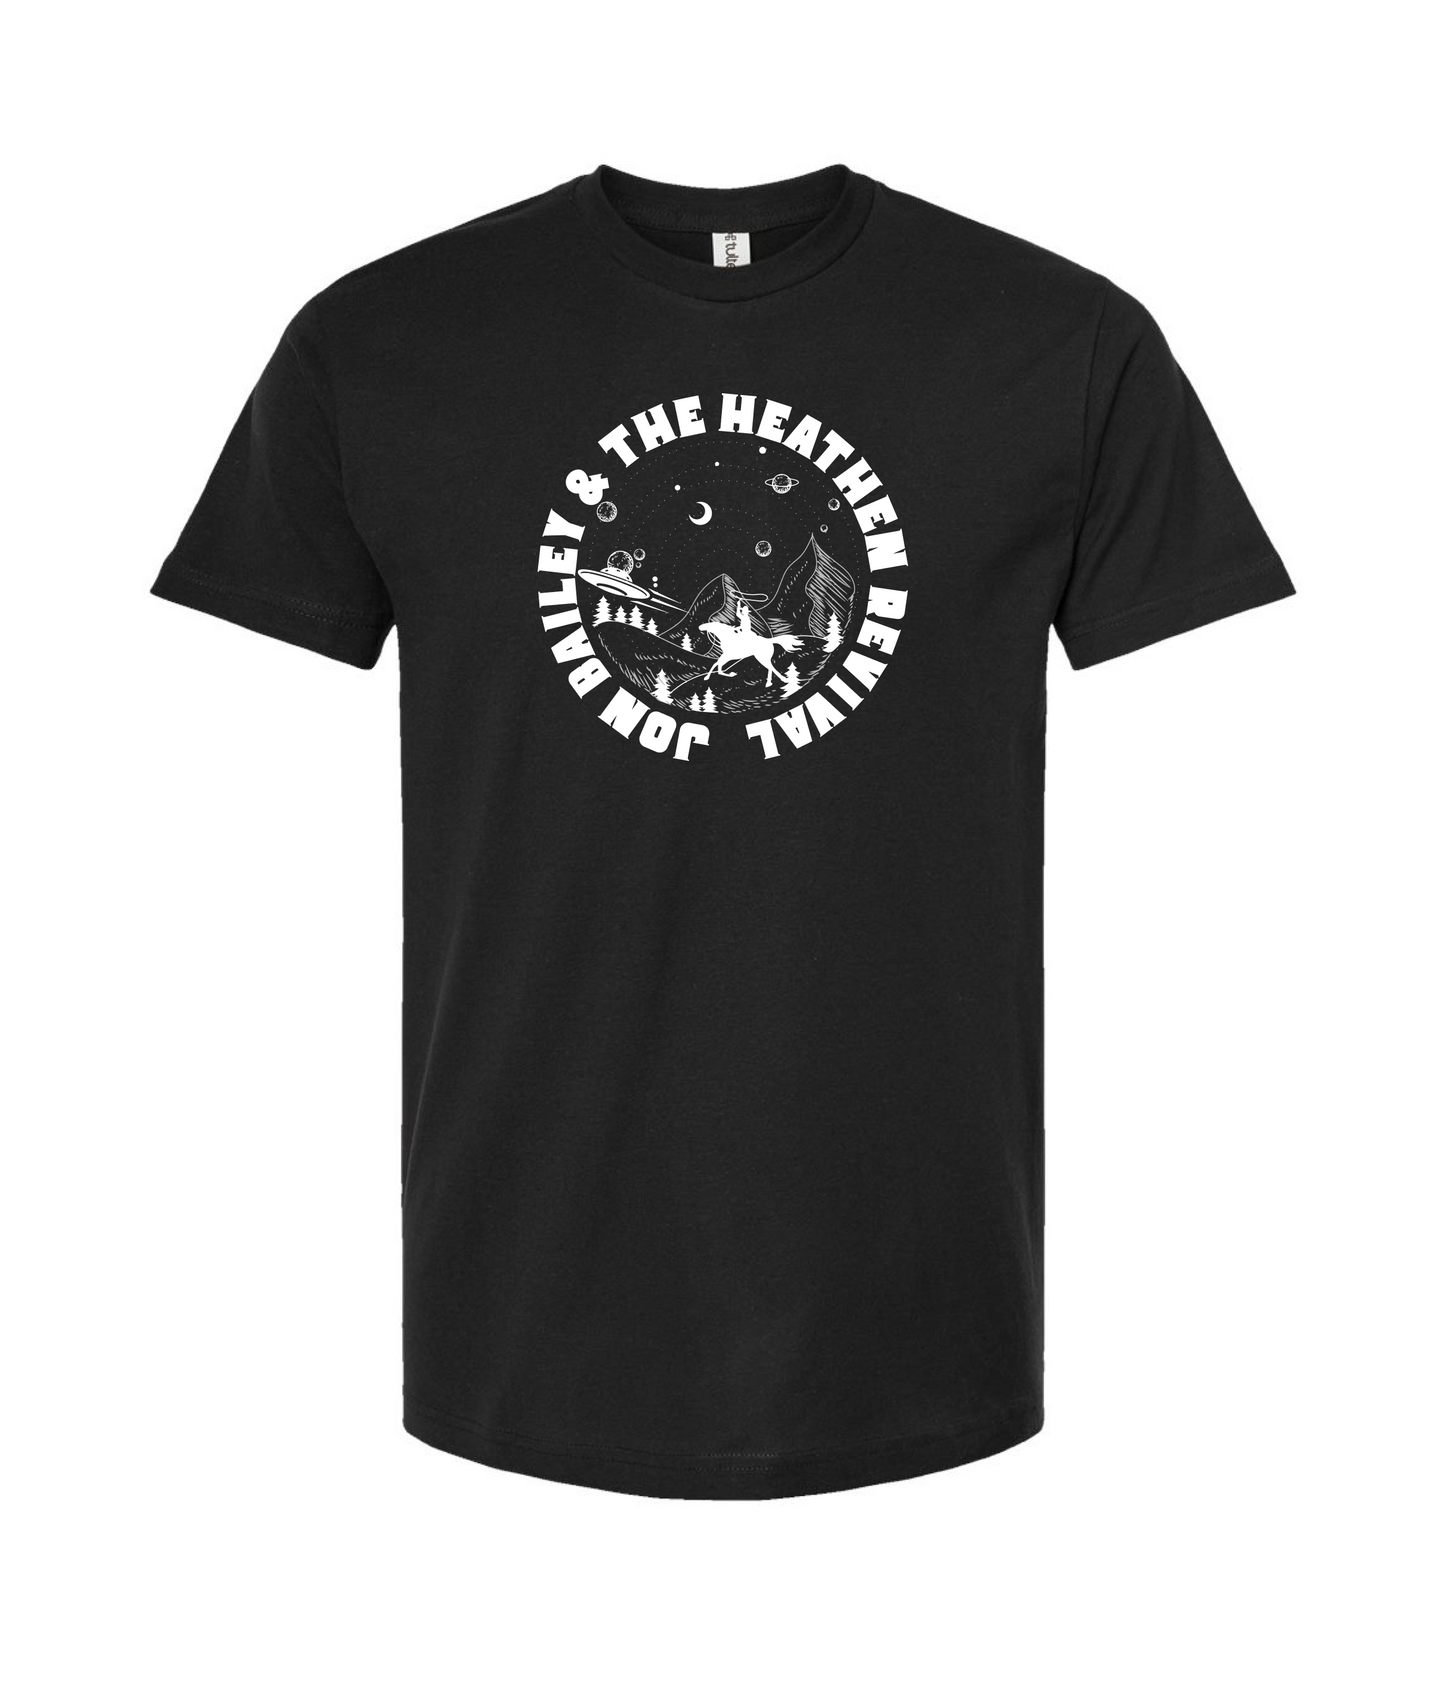 Jon Bailey & The Heathen Revival - Cowboys & UFOs - Black T-Shirt